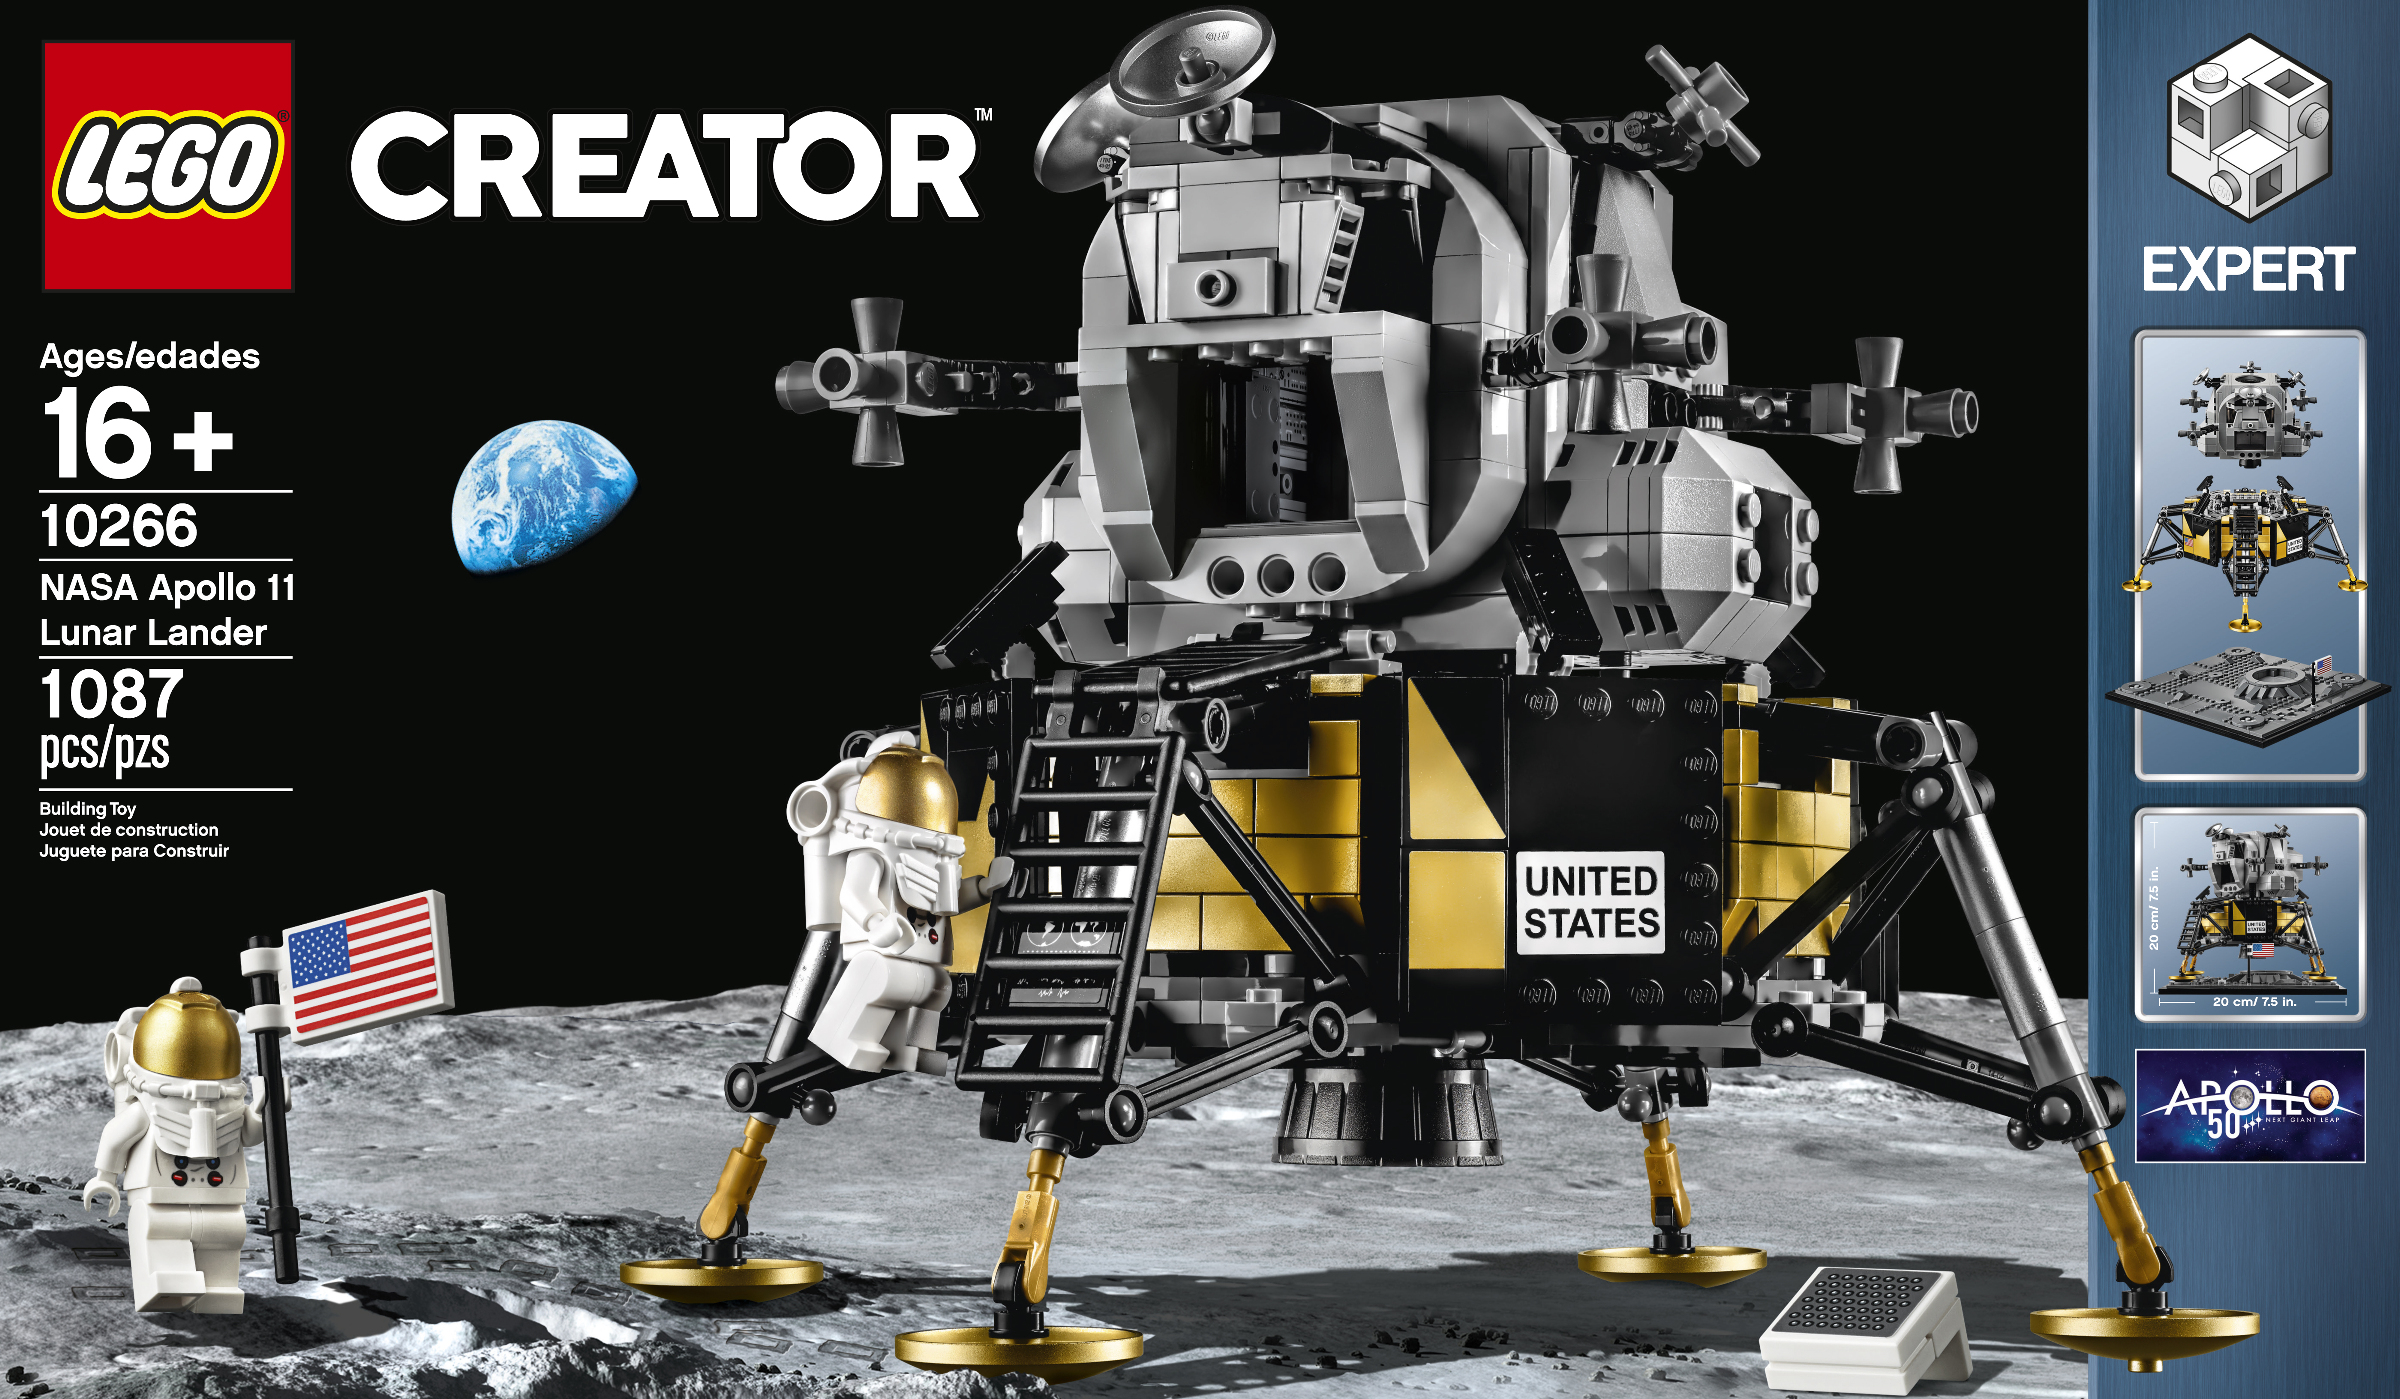 NASA Apollo 11 Lunar Lander 13-17 წელი - LEGO Toys - ლეგოს სათამაშოები